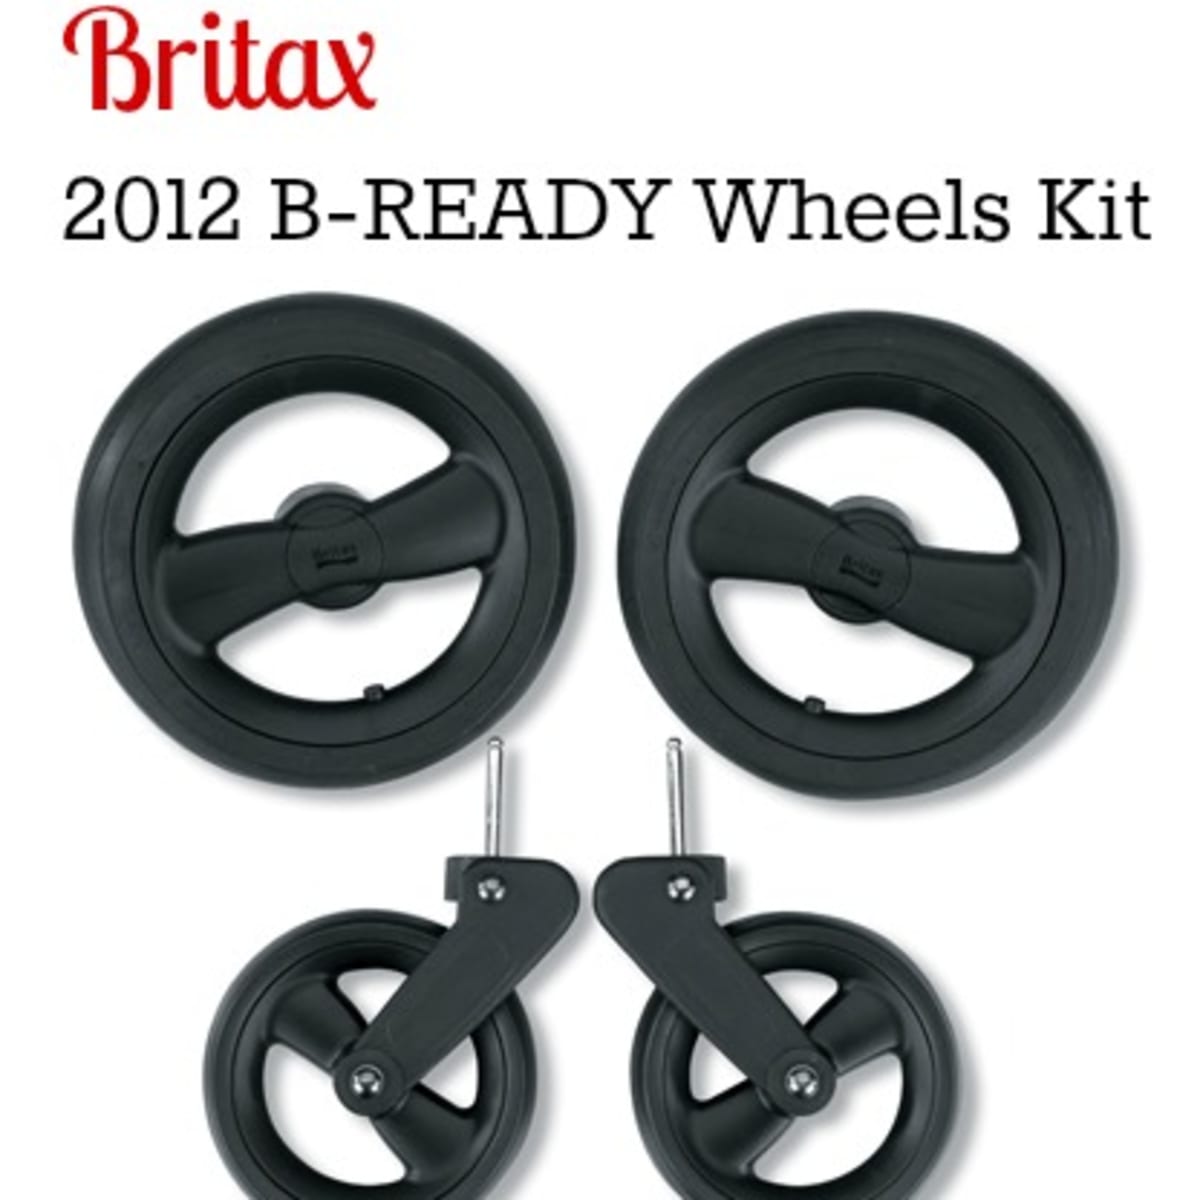 britax b ready replacement wheels